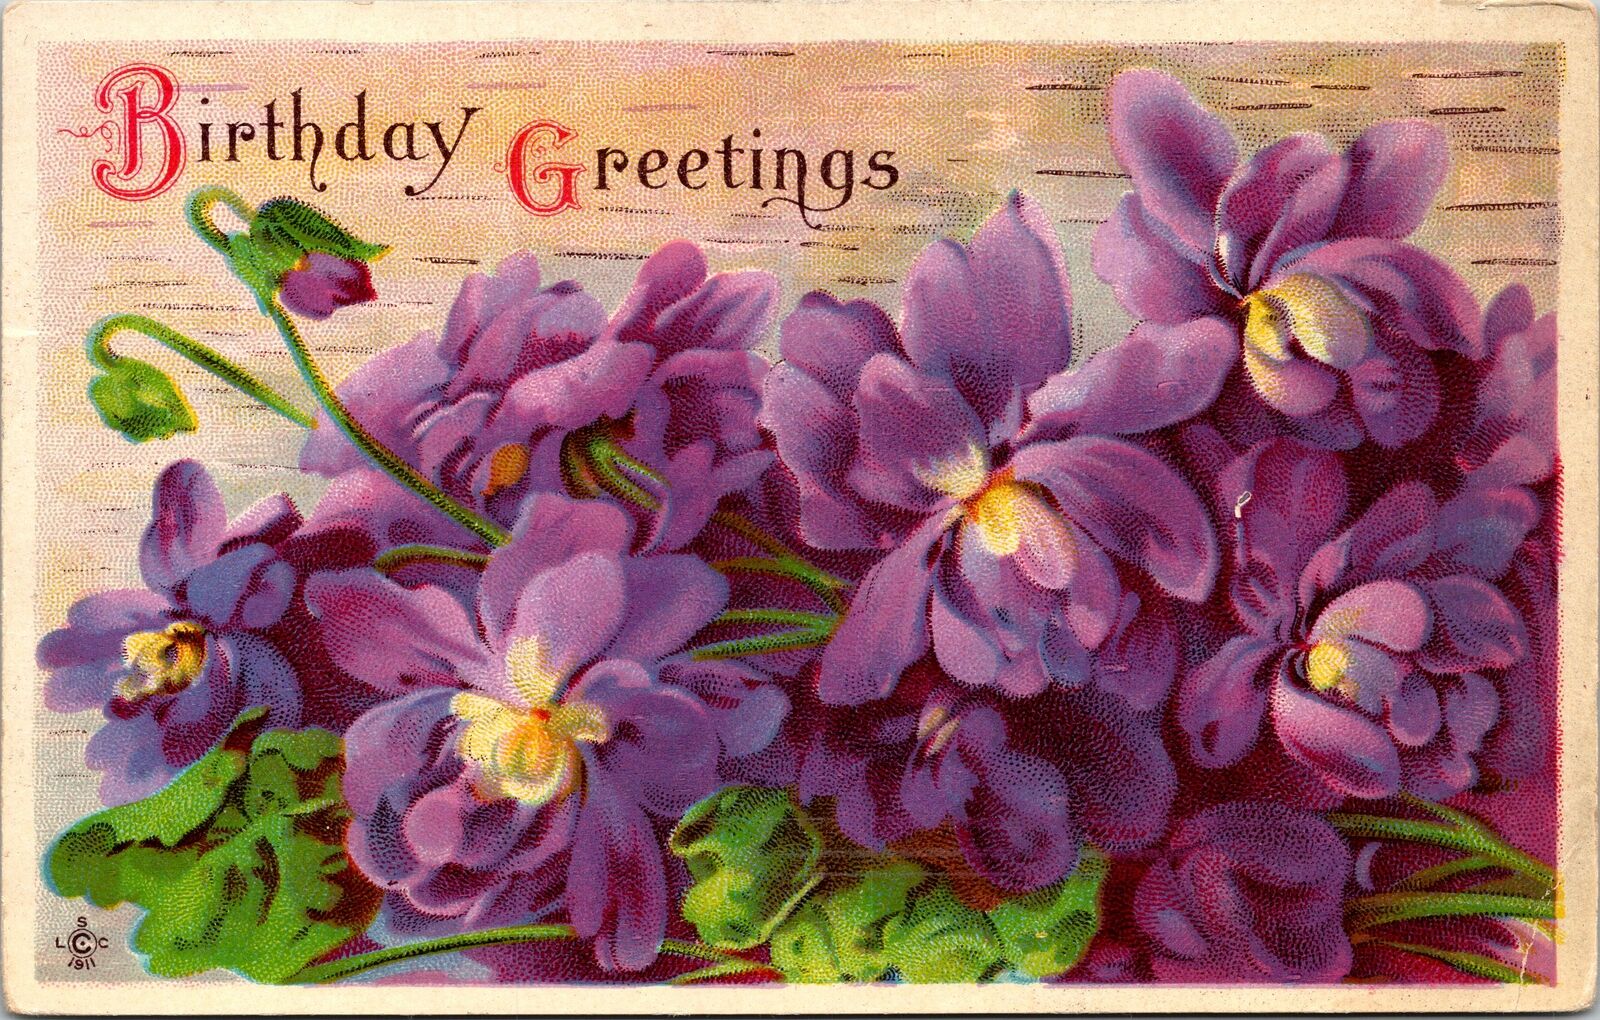 VINTAGE POSTCARD FLOWERS BIRTHDAY GREETINGS MAILED SOUTH ROYALTON VERMONT 1915